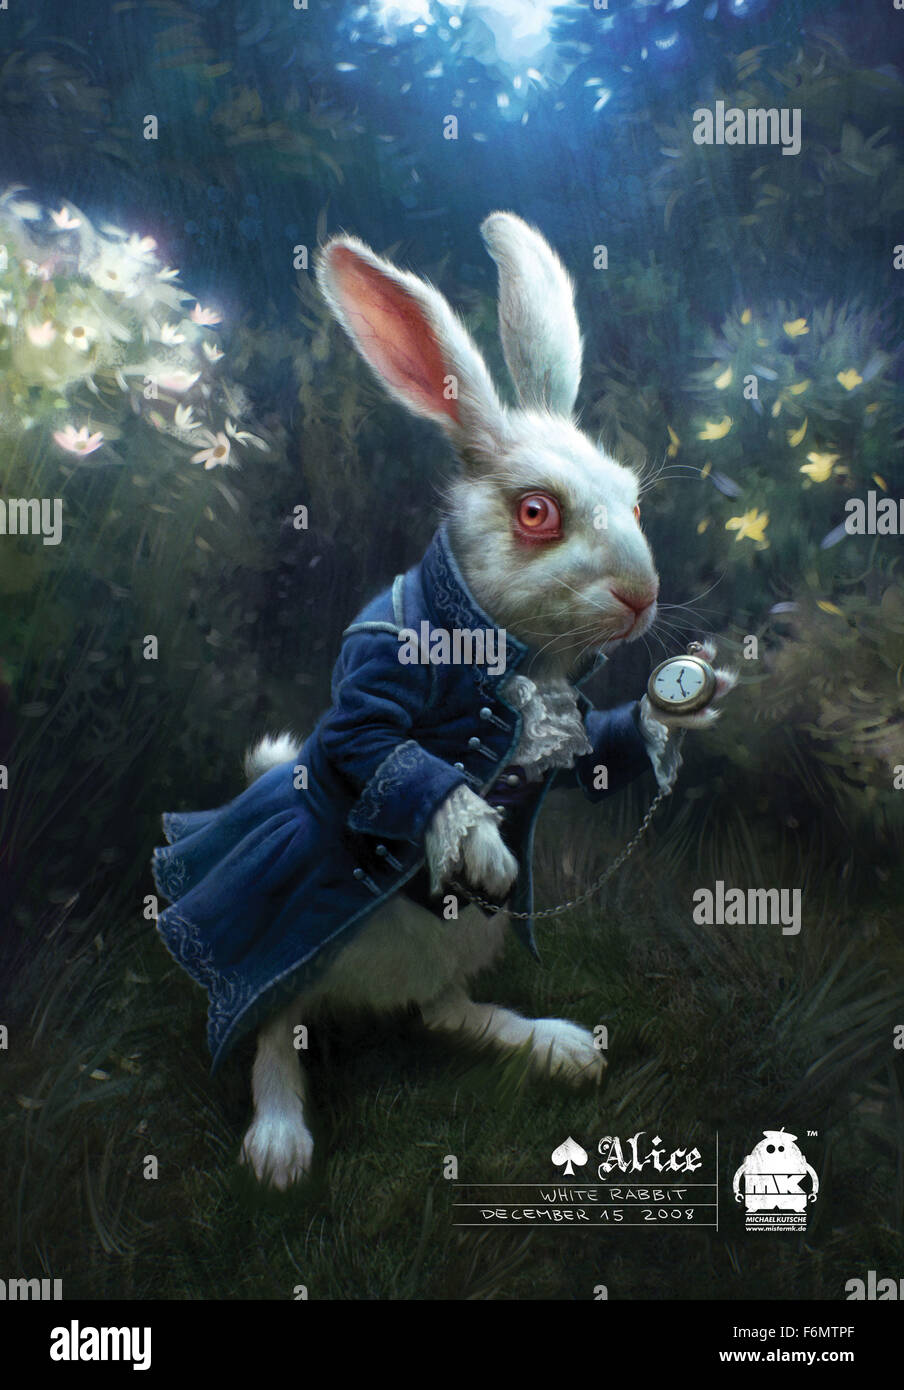 Tim burton alice and wonderland rabbit hi-res stock photography and images  - Alamy